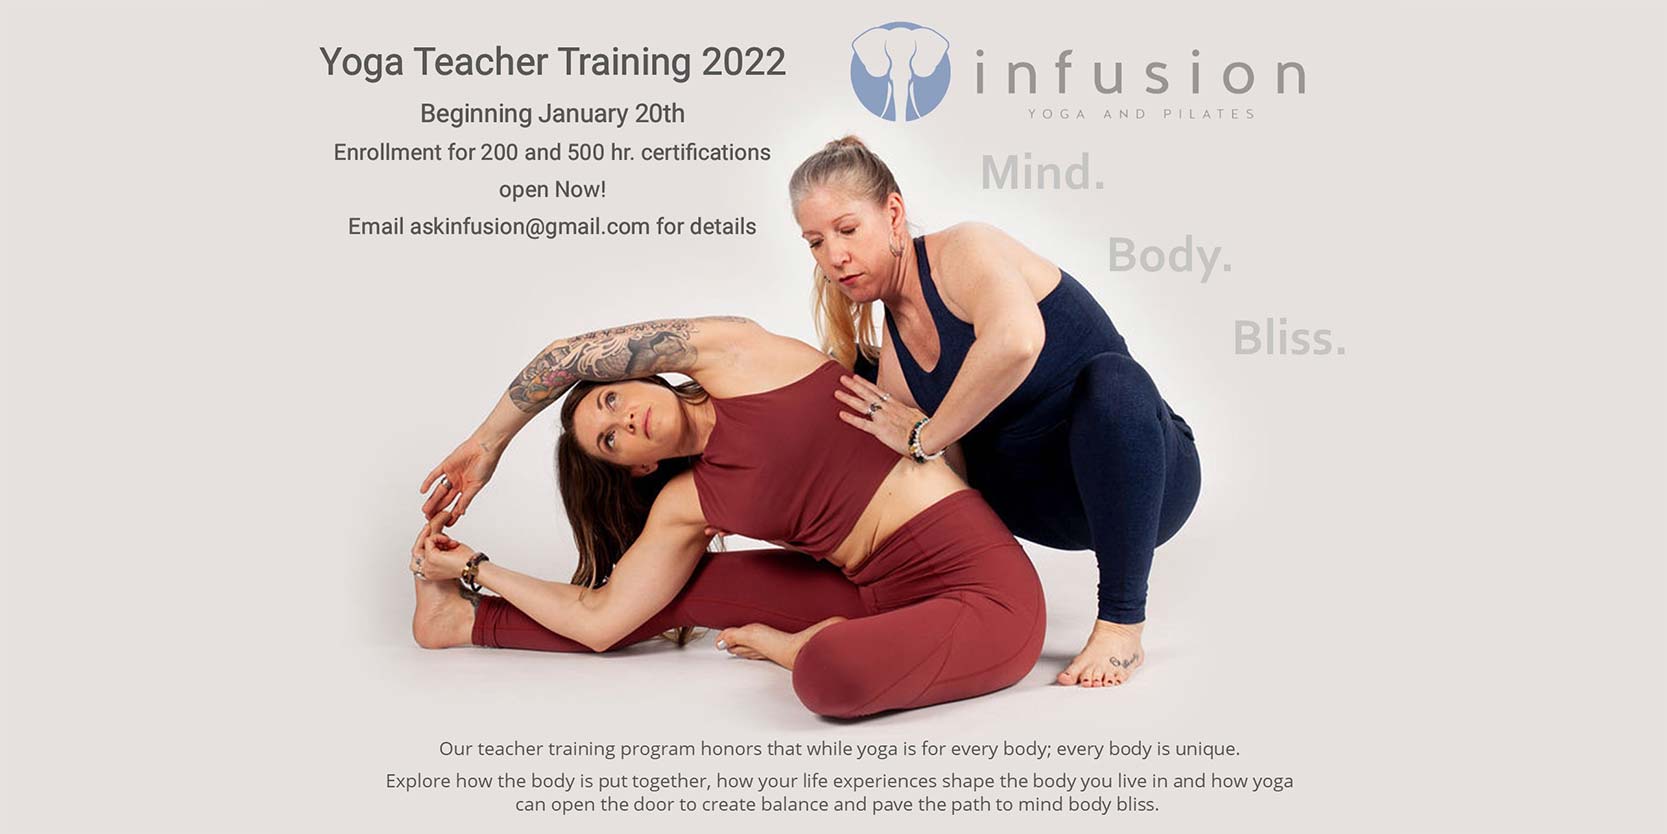 Yoga Teacher Training 2022